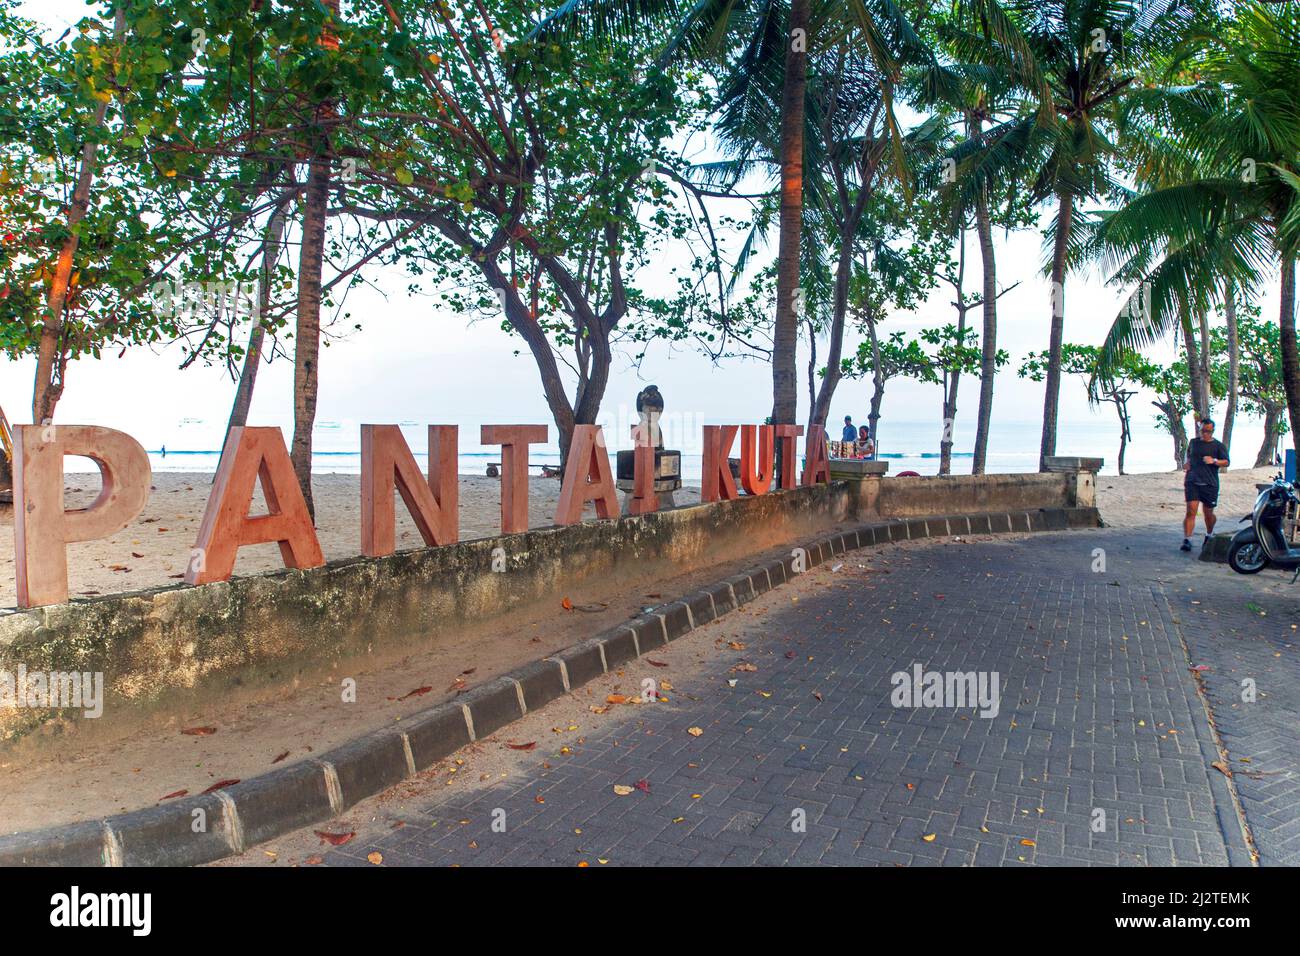 Red letters of the Pantai Kuta or Kuta Beach sign in Bali, Indonesia. Stock Photo